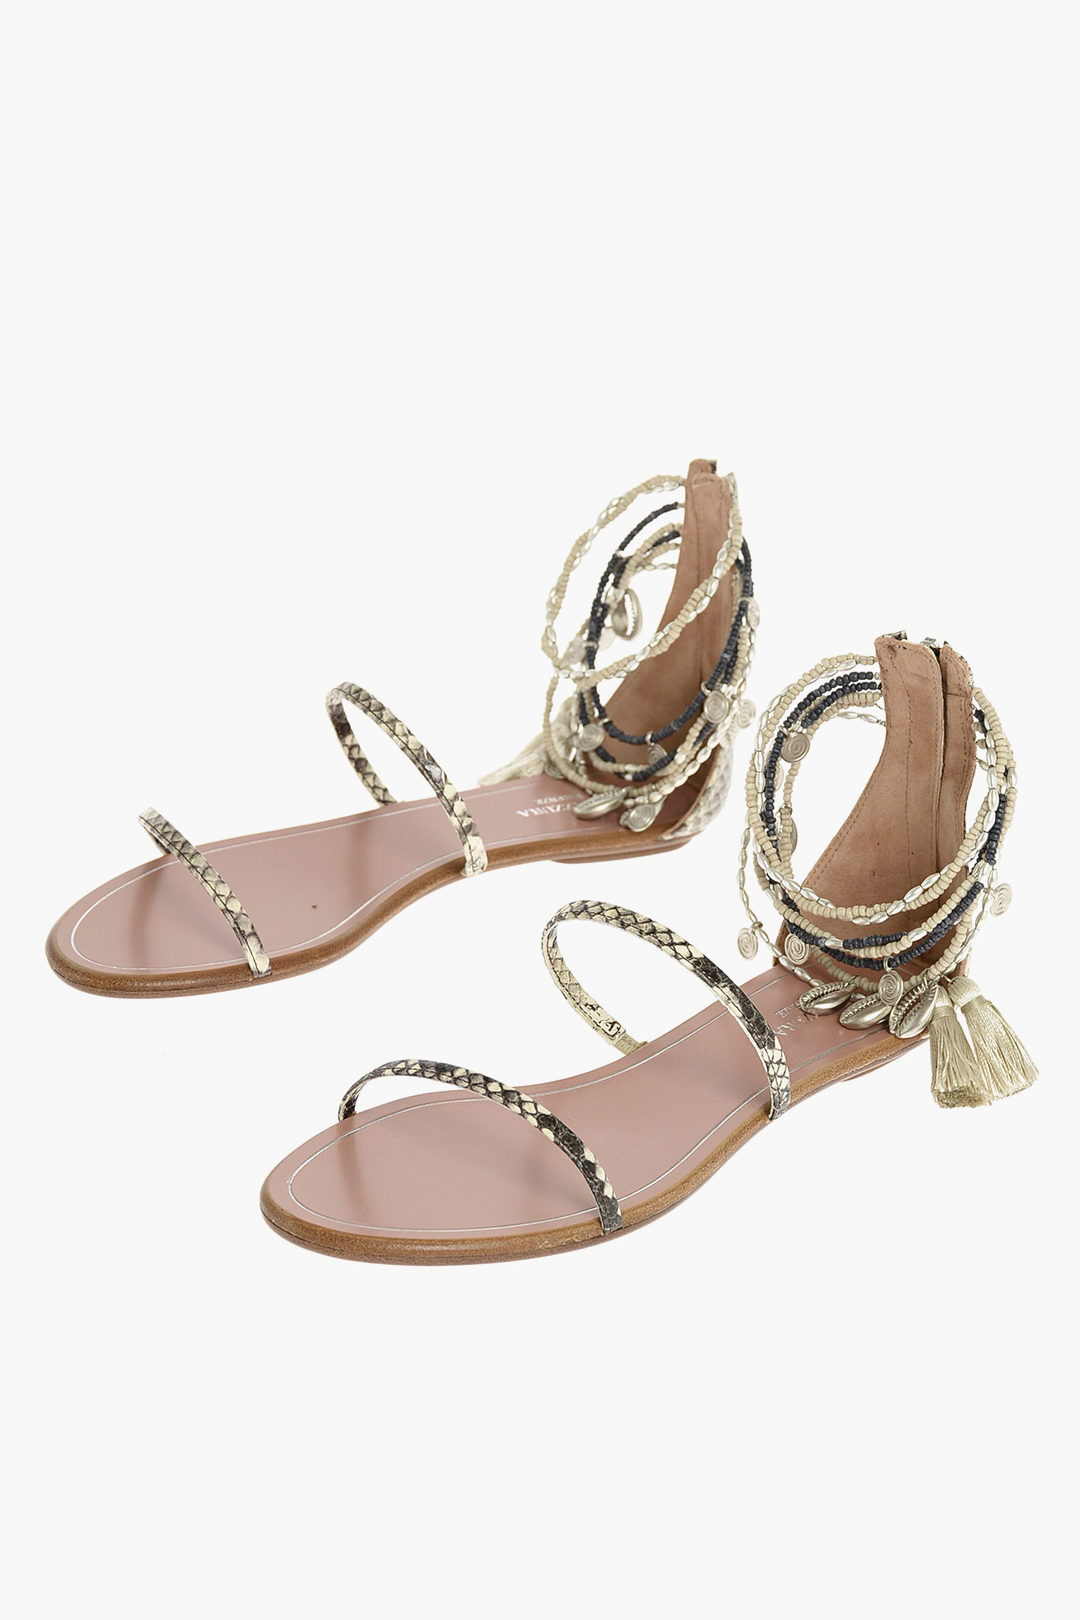 Aquazzura Snake India Flat Sandals With Tassels Women Glamood Outlet